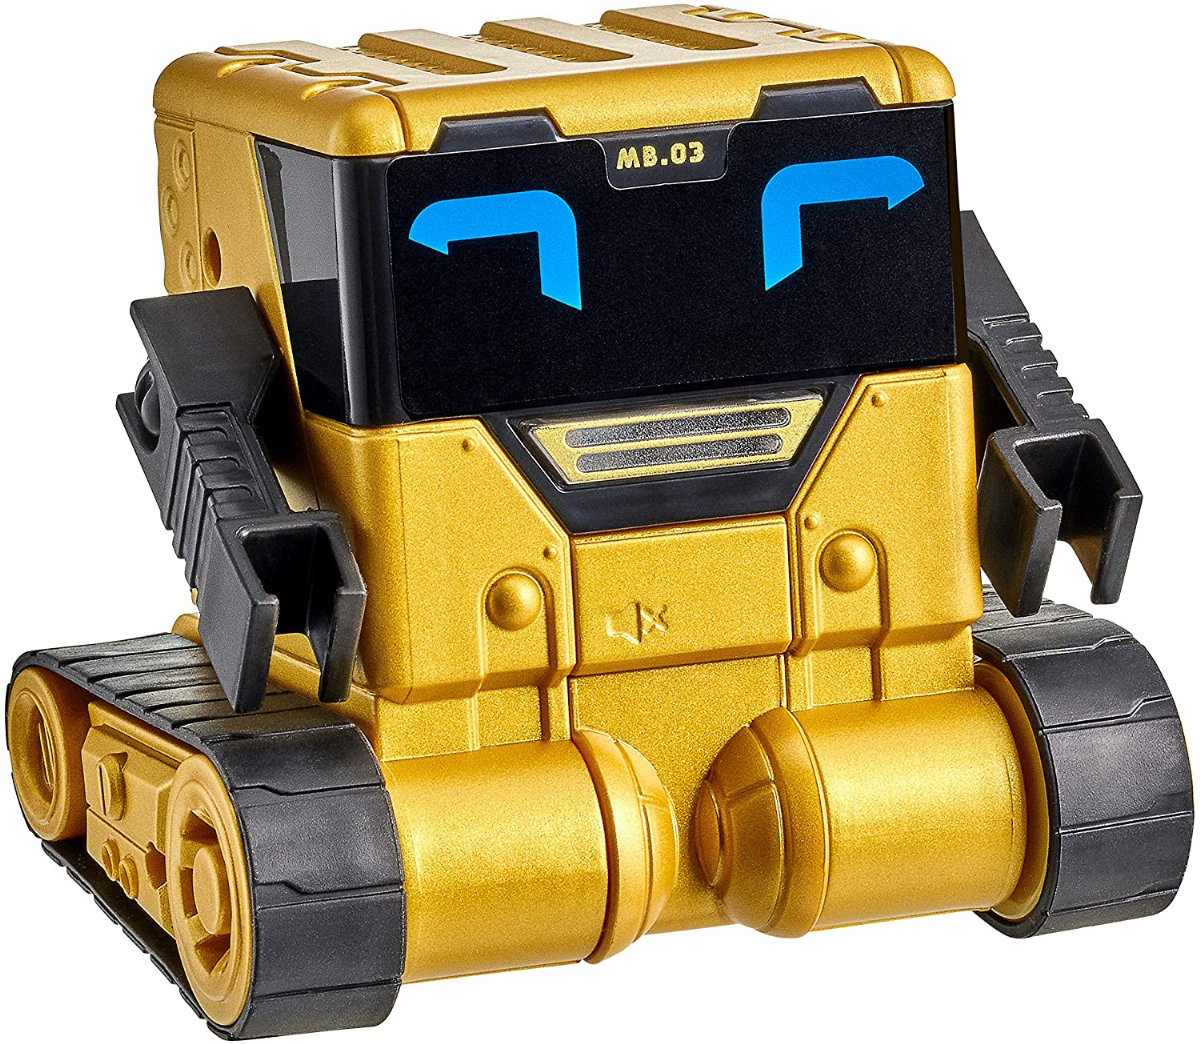 Moose Toys Llc Really Rad Robots Mibro Gold Plays Talks And Pranks Amazon Exclusive Mibro Gold Exclusive Lazada Ph